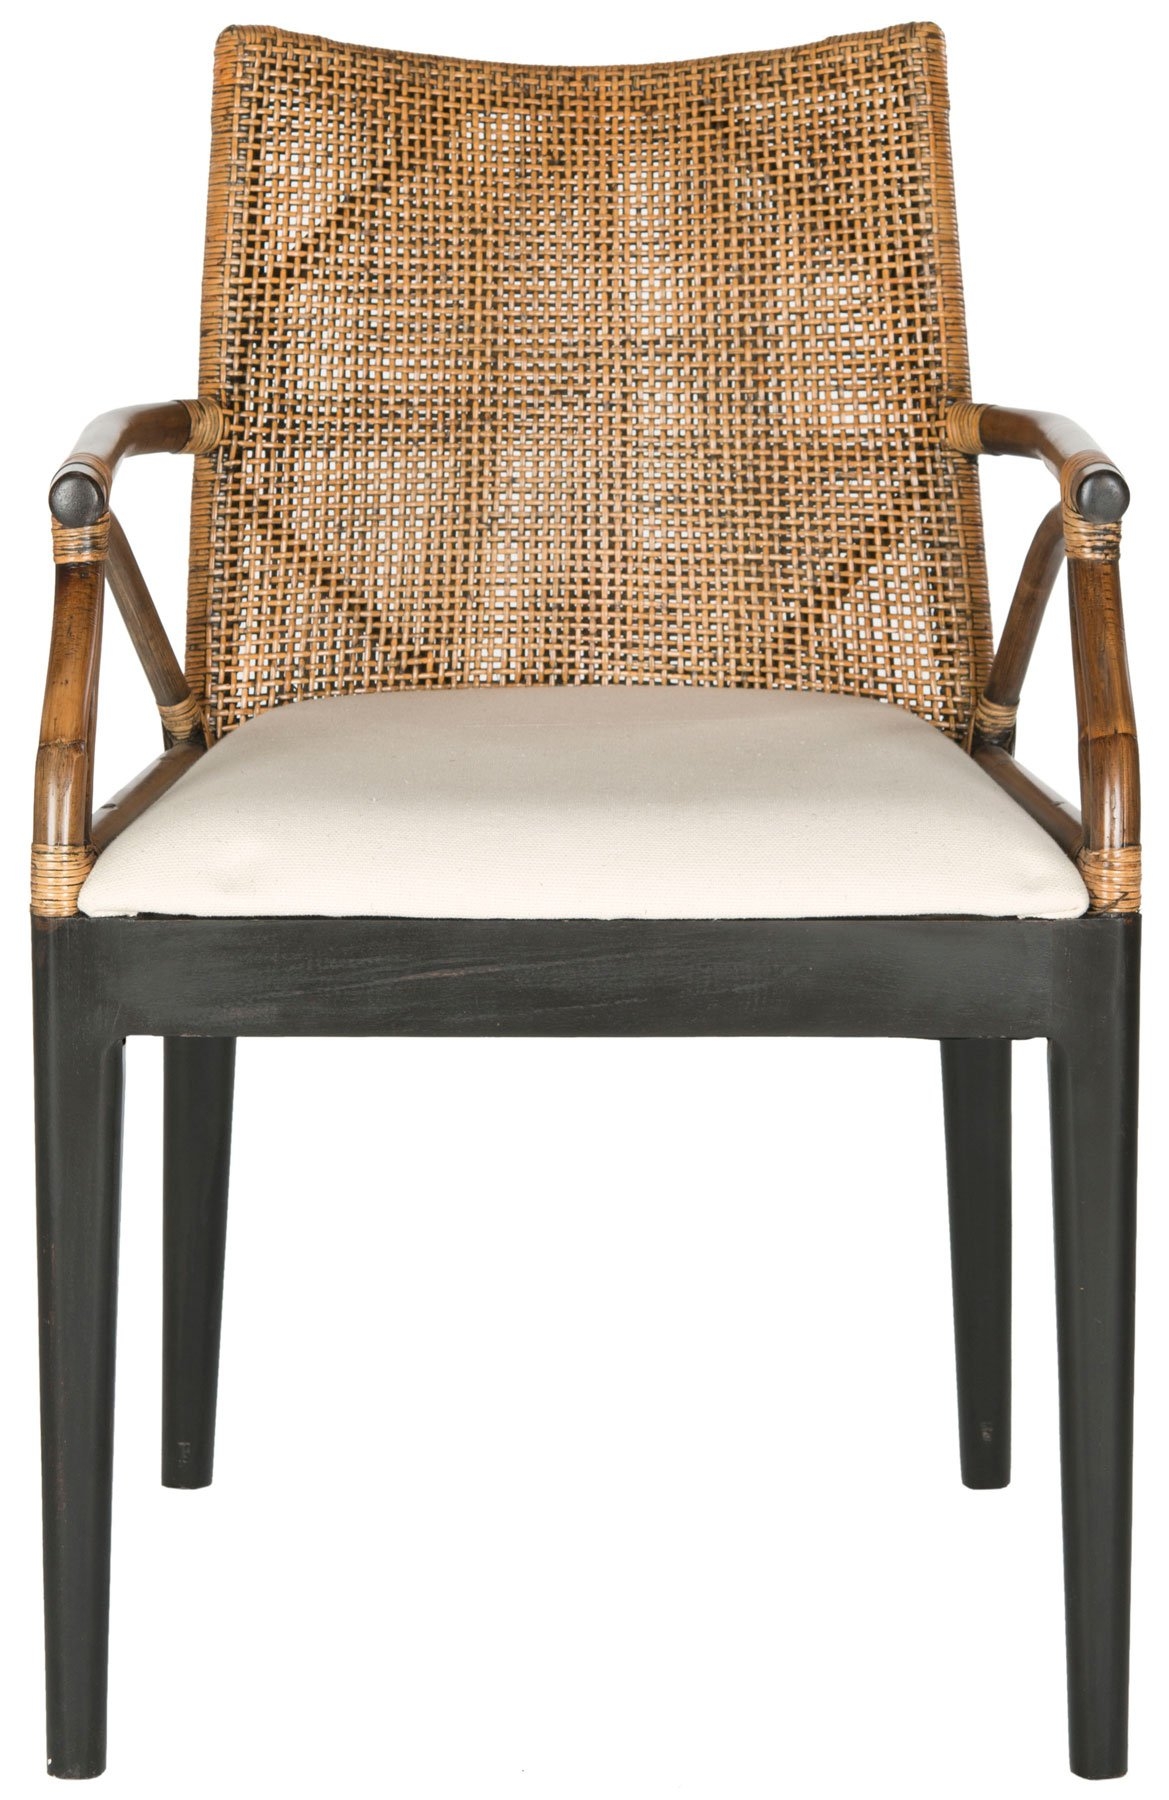 Gianni Arm Chair - Brown/White - Arlo Home - Image 0